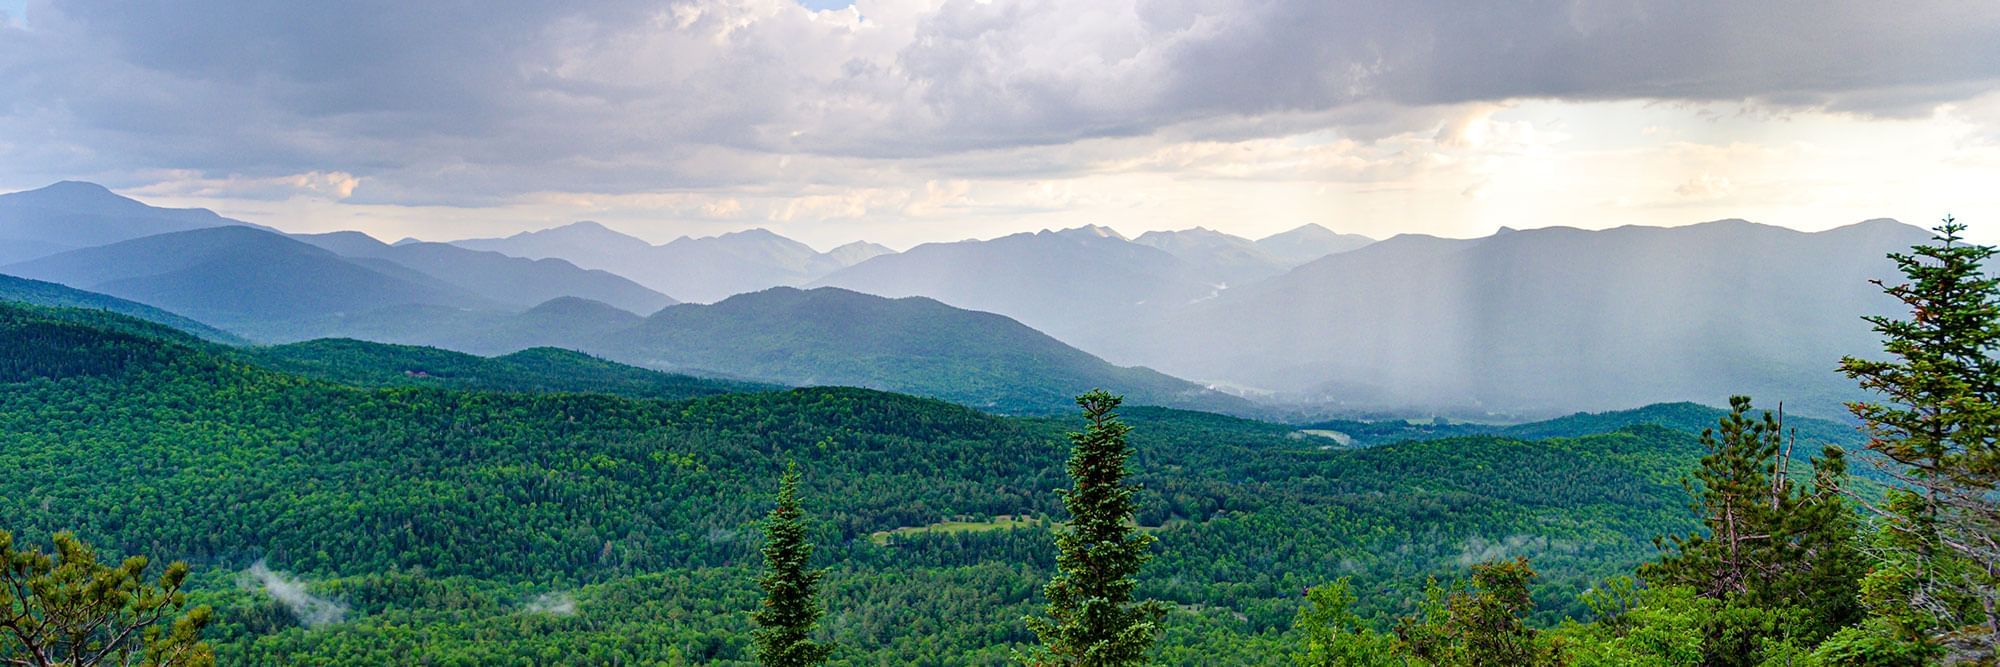 Landscape of the Adirondack High Peaks